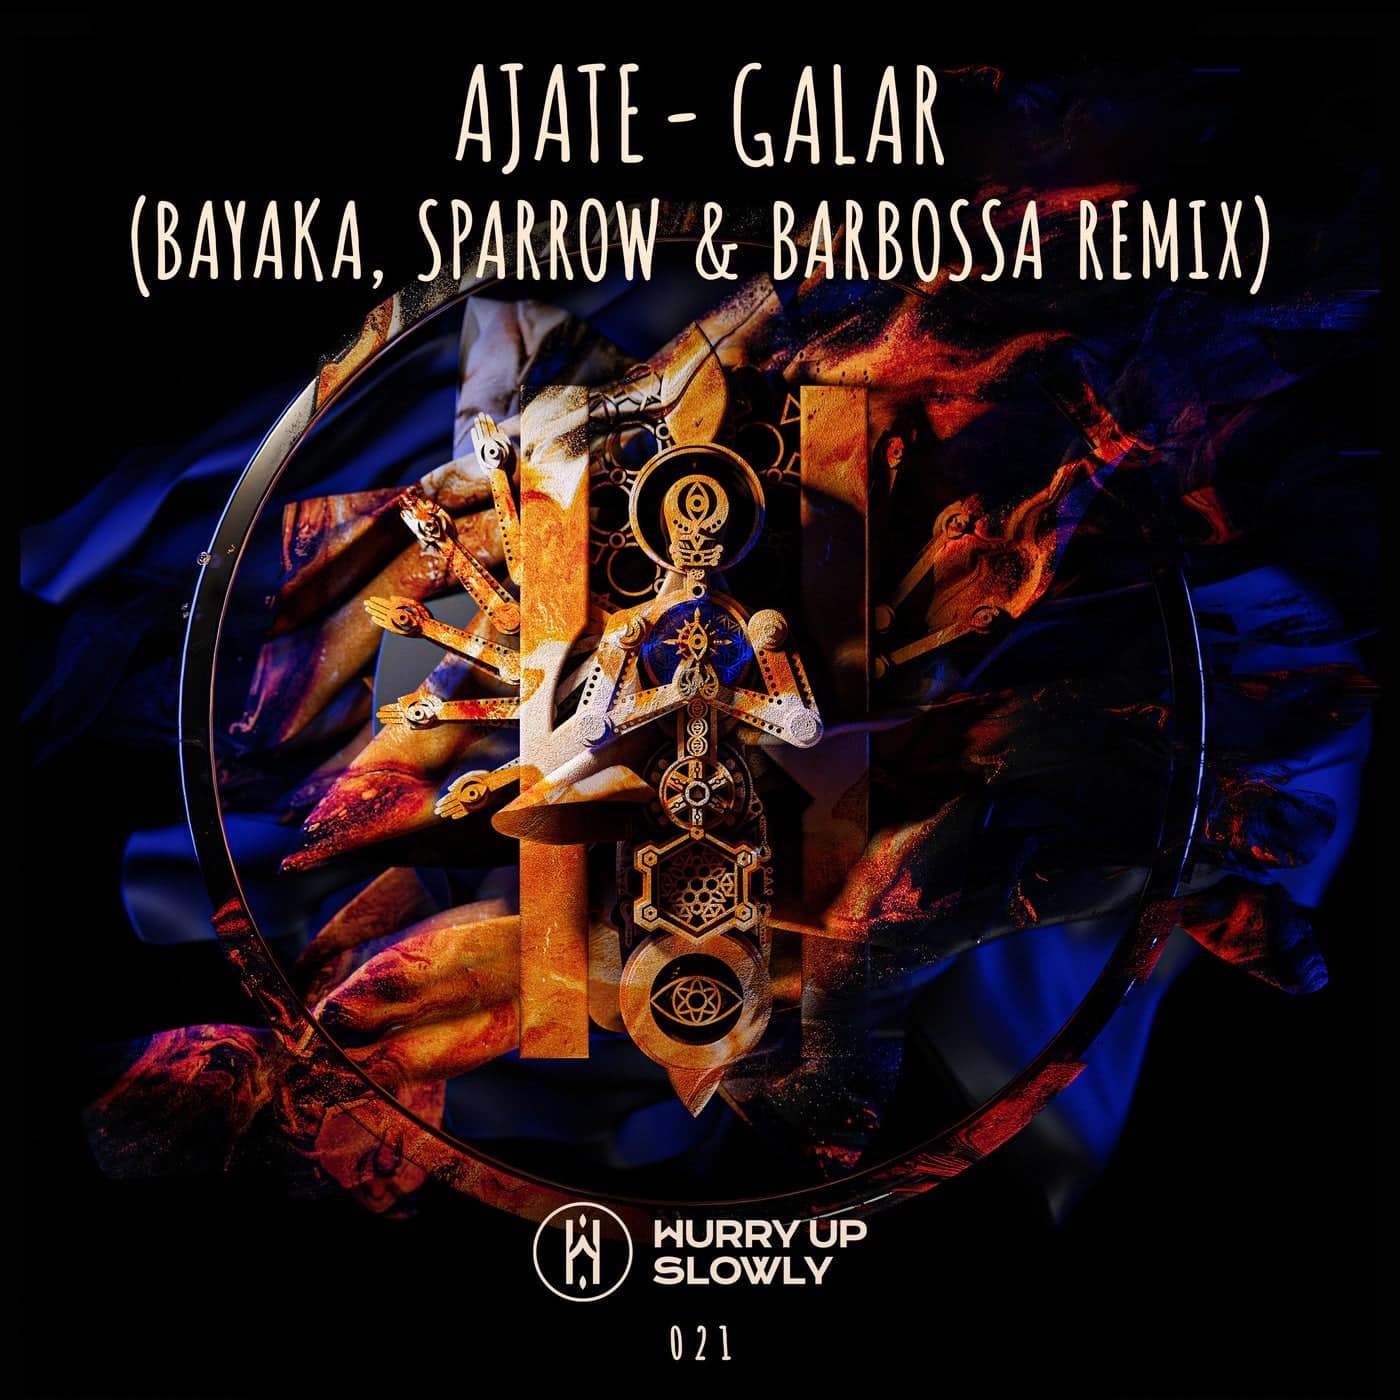 image cover: Ajate - Galar (Bayaka, Sparrow & Barbossa Remix) / HUS021